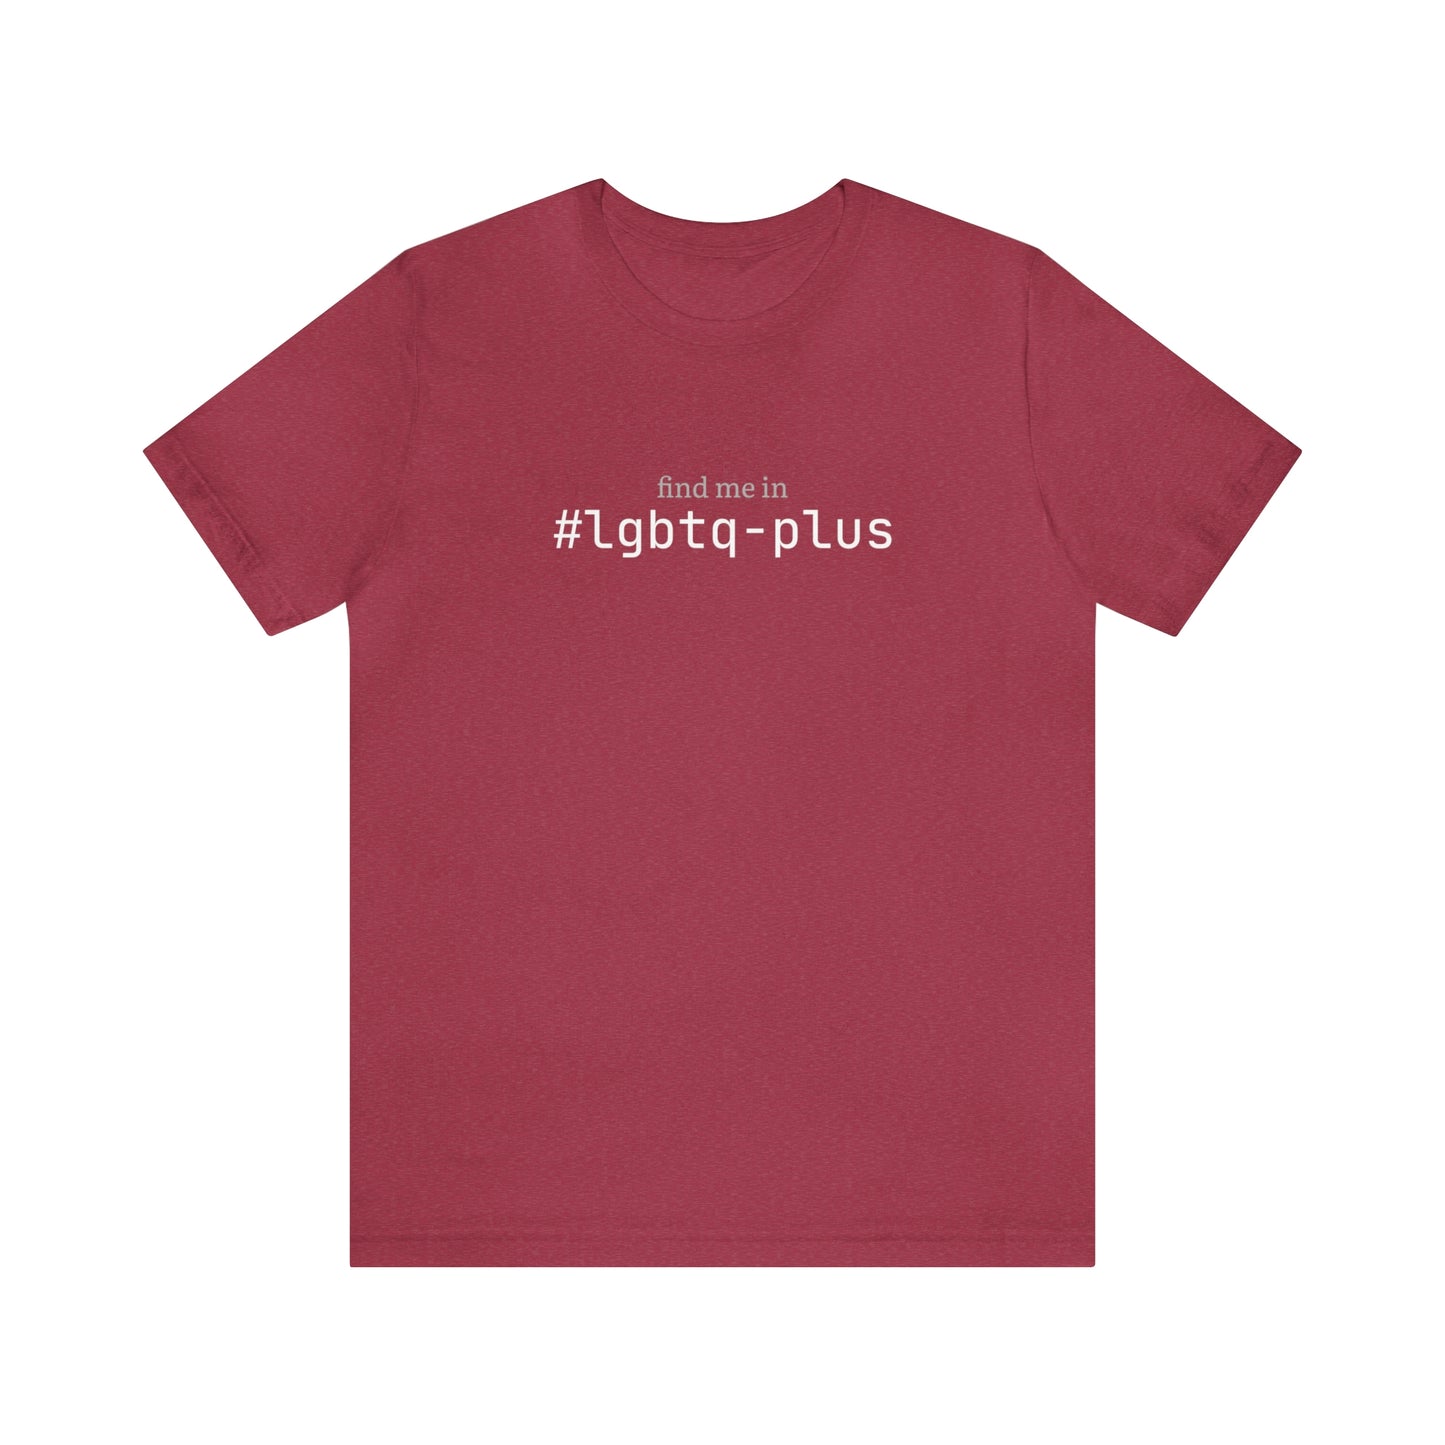 Find me in #lgbtq-plus T-Shirt